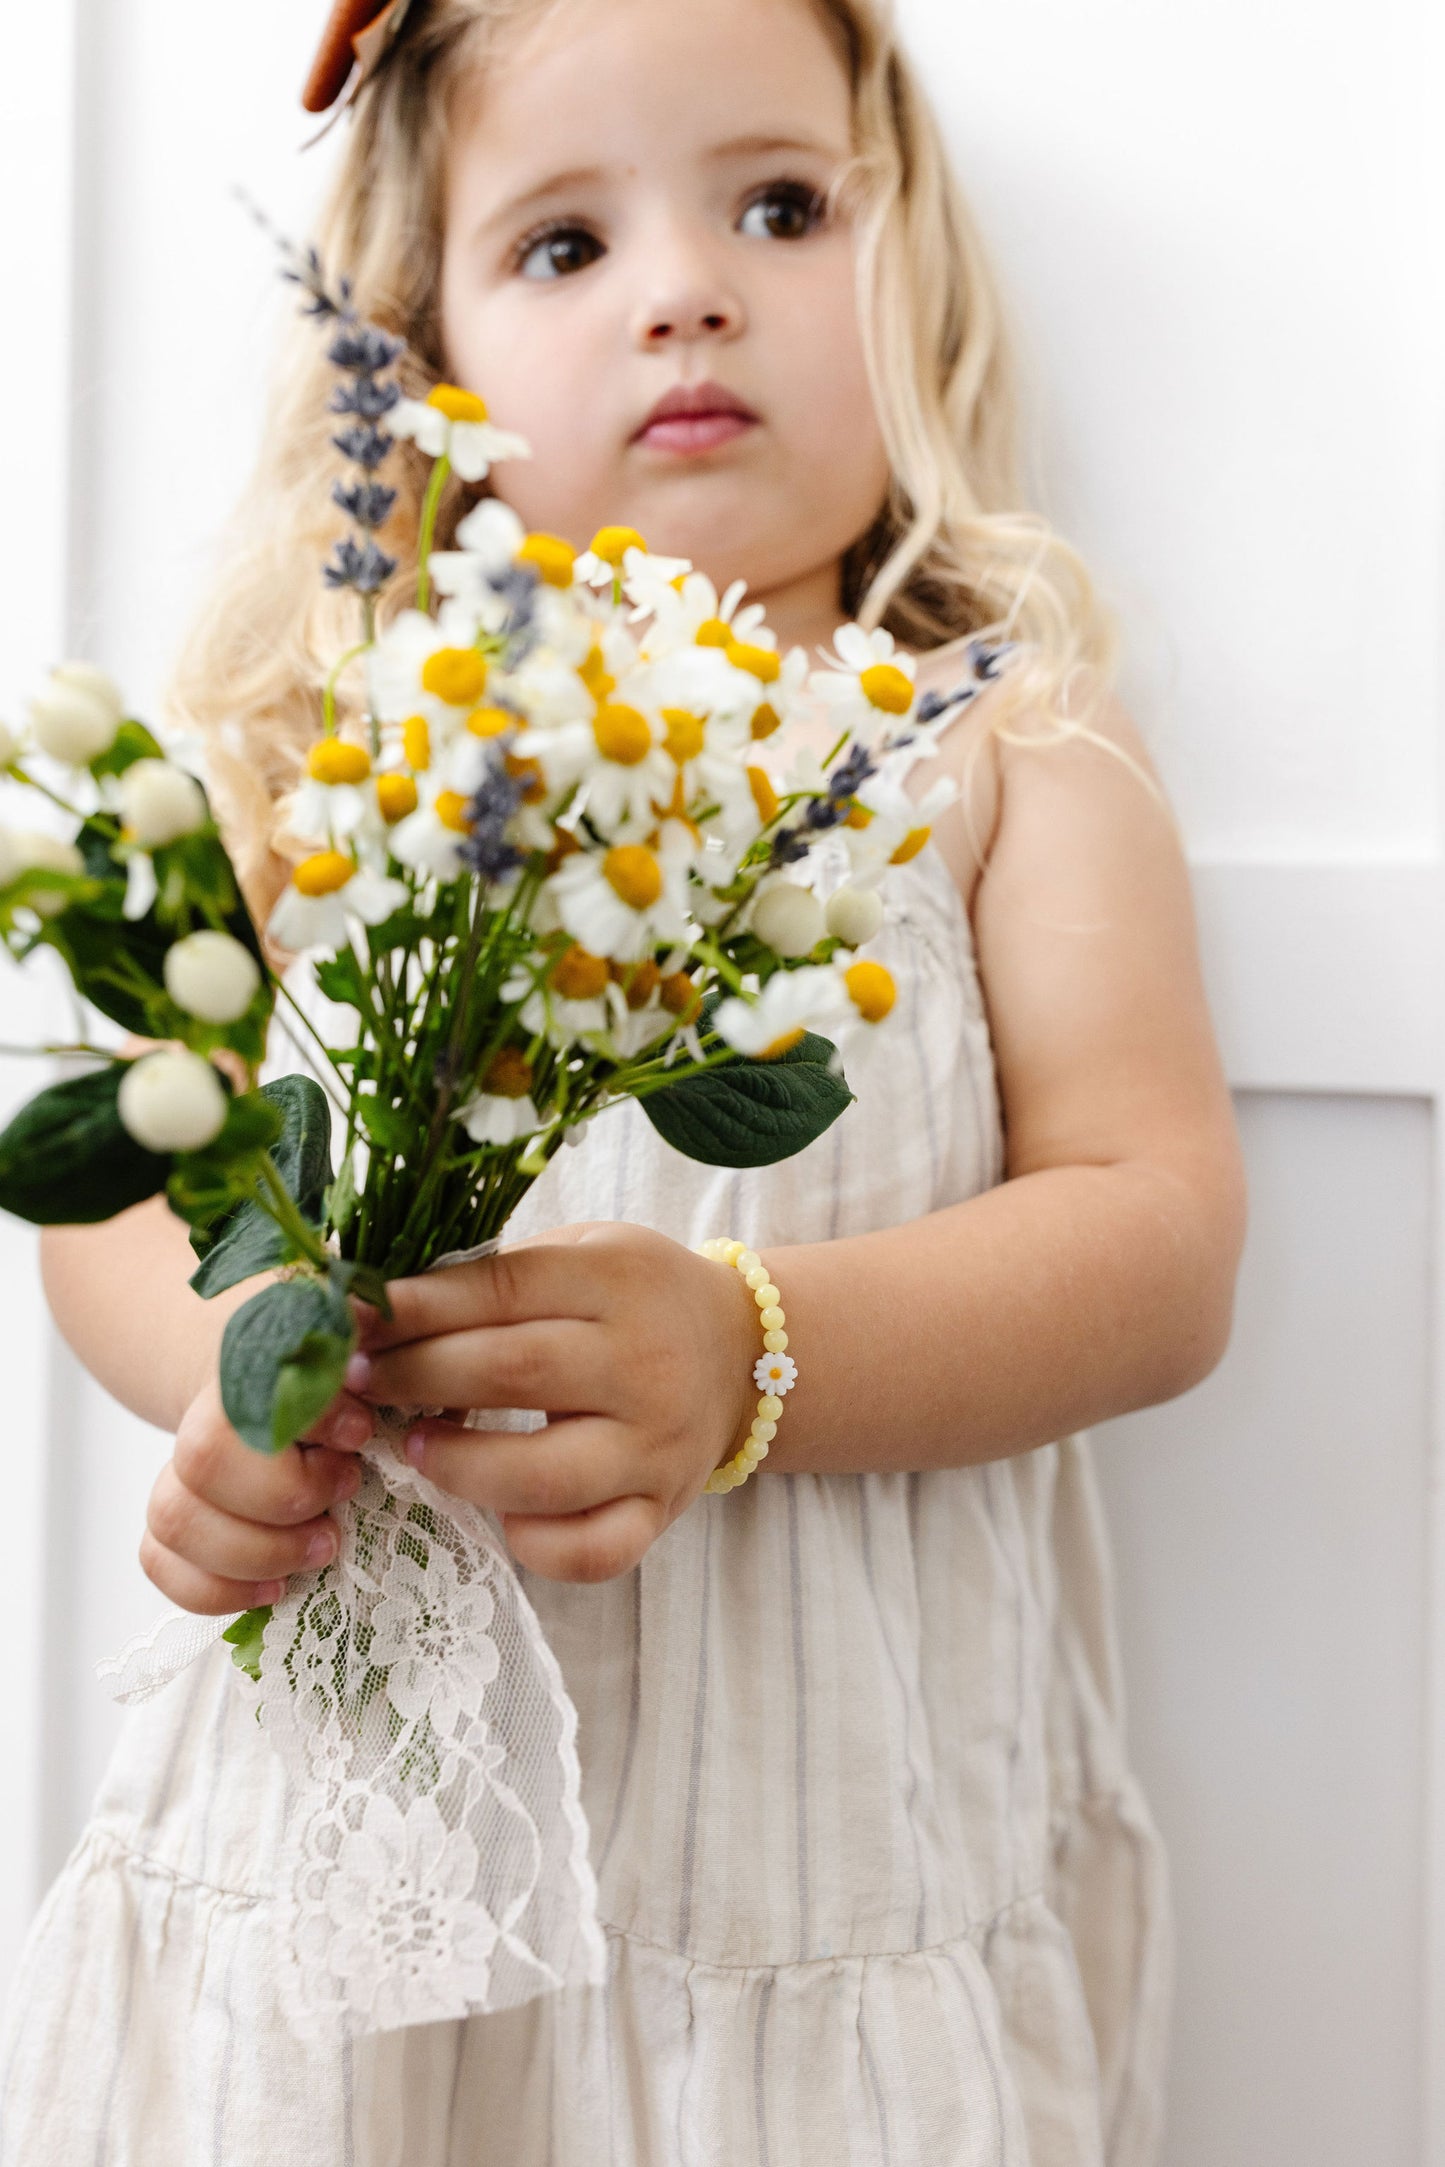 Daisy Mom + Mini Bracelet set (Daffodil 4MM Beads)